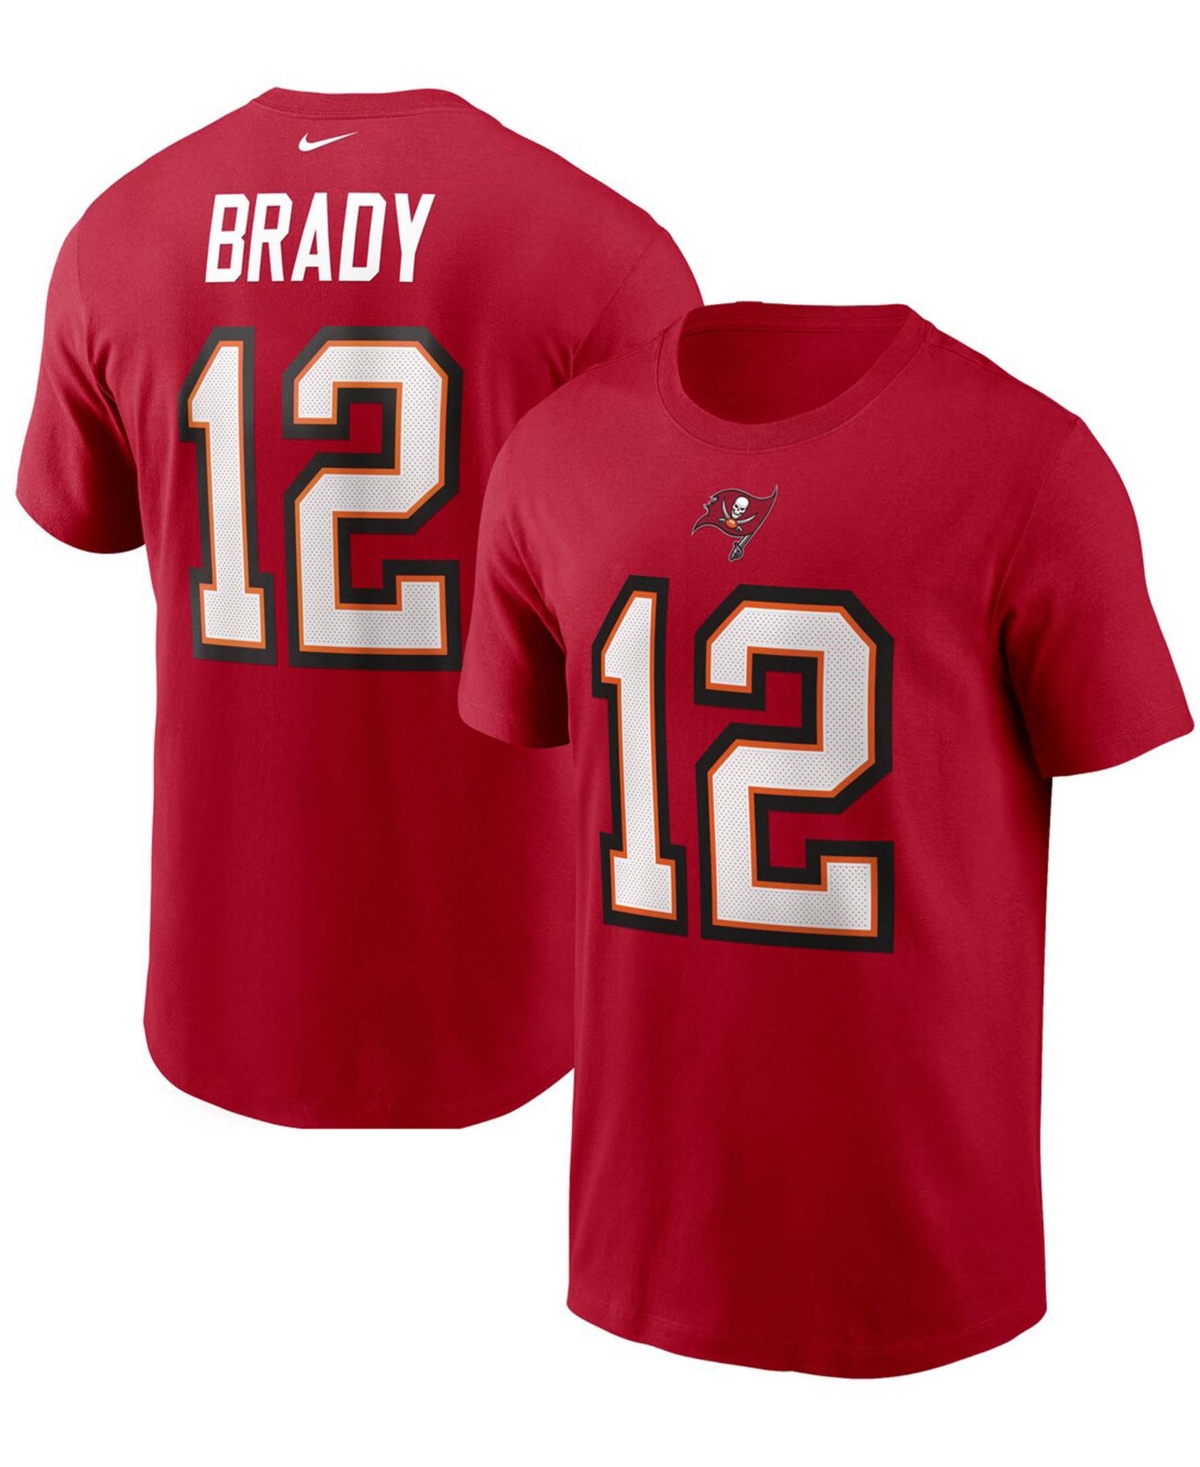 Shop Nike Men's Tom Brady Red Tampa Bay Buccaneers Name Number T-shirt